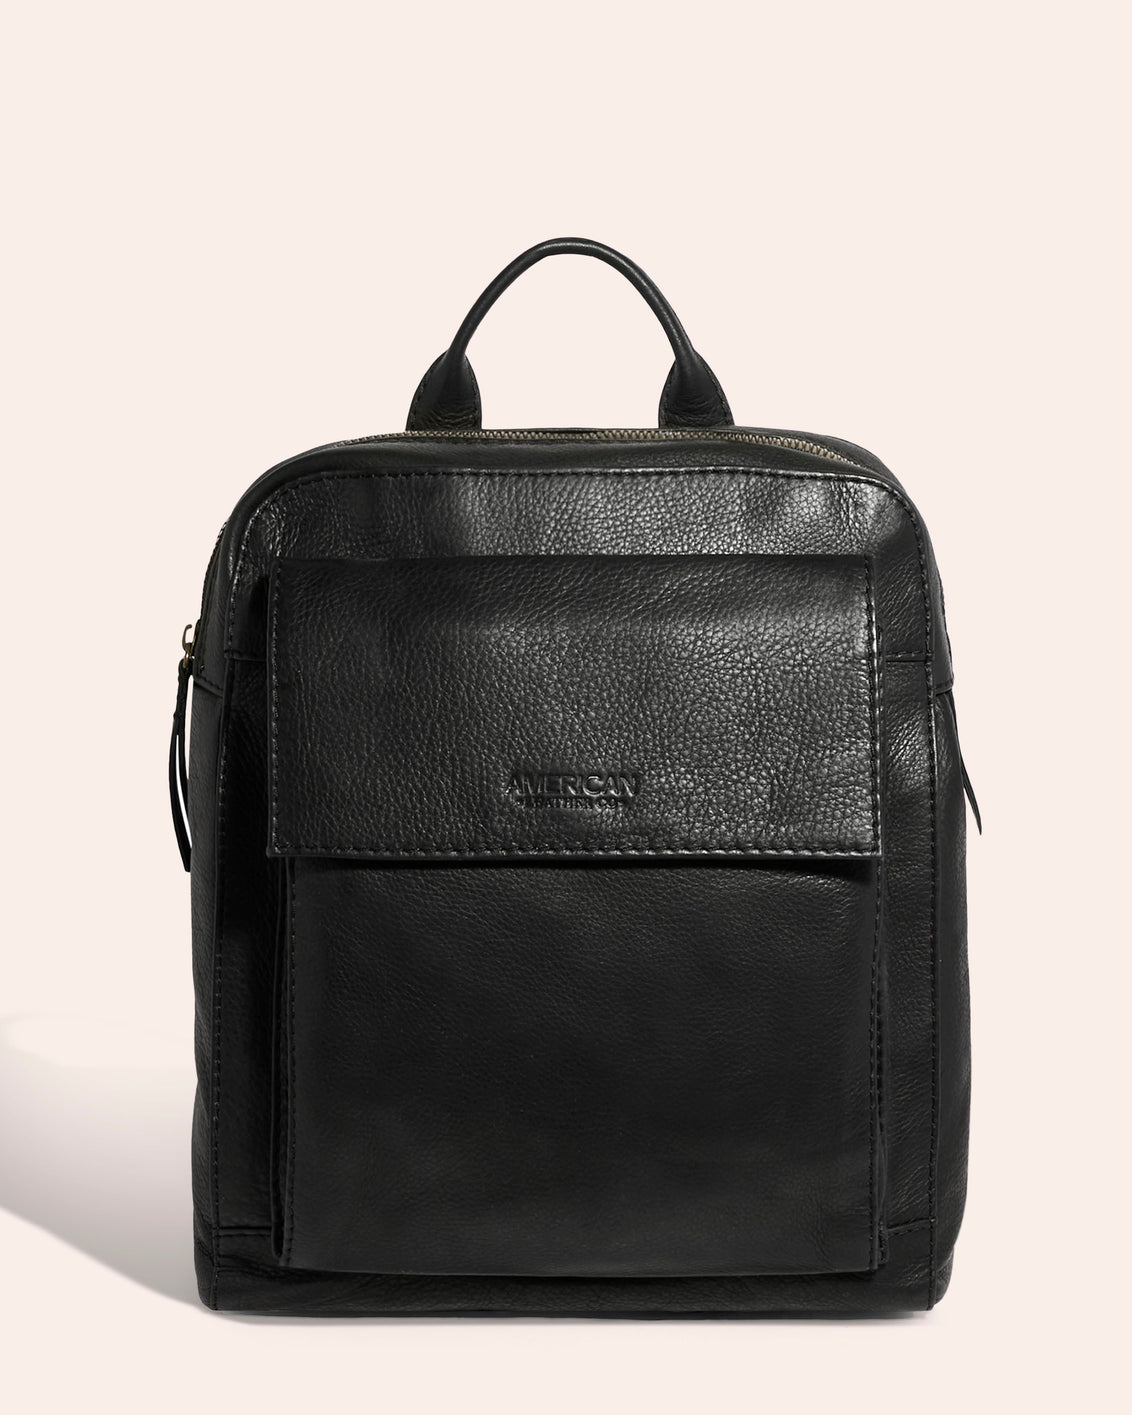 American Leather Co. Celina Backpack Black